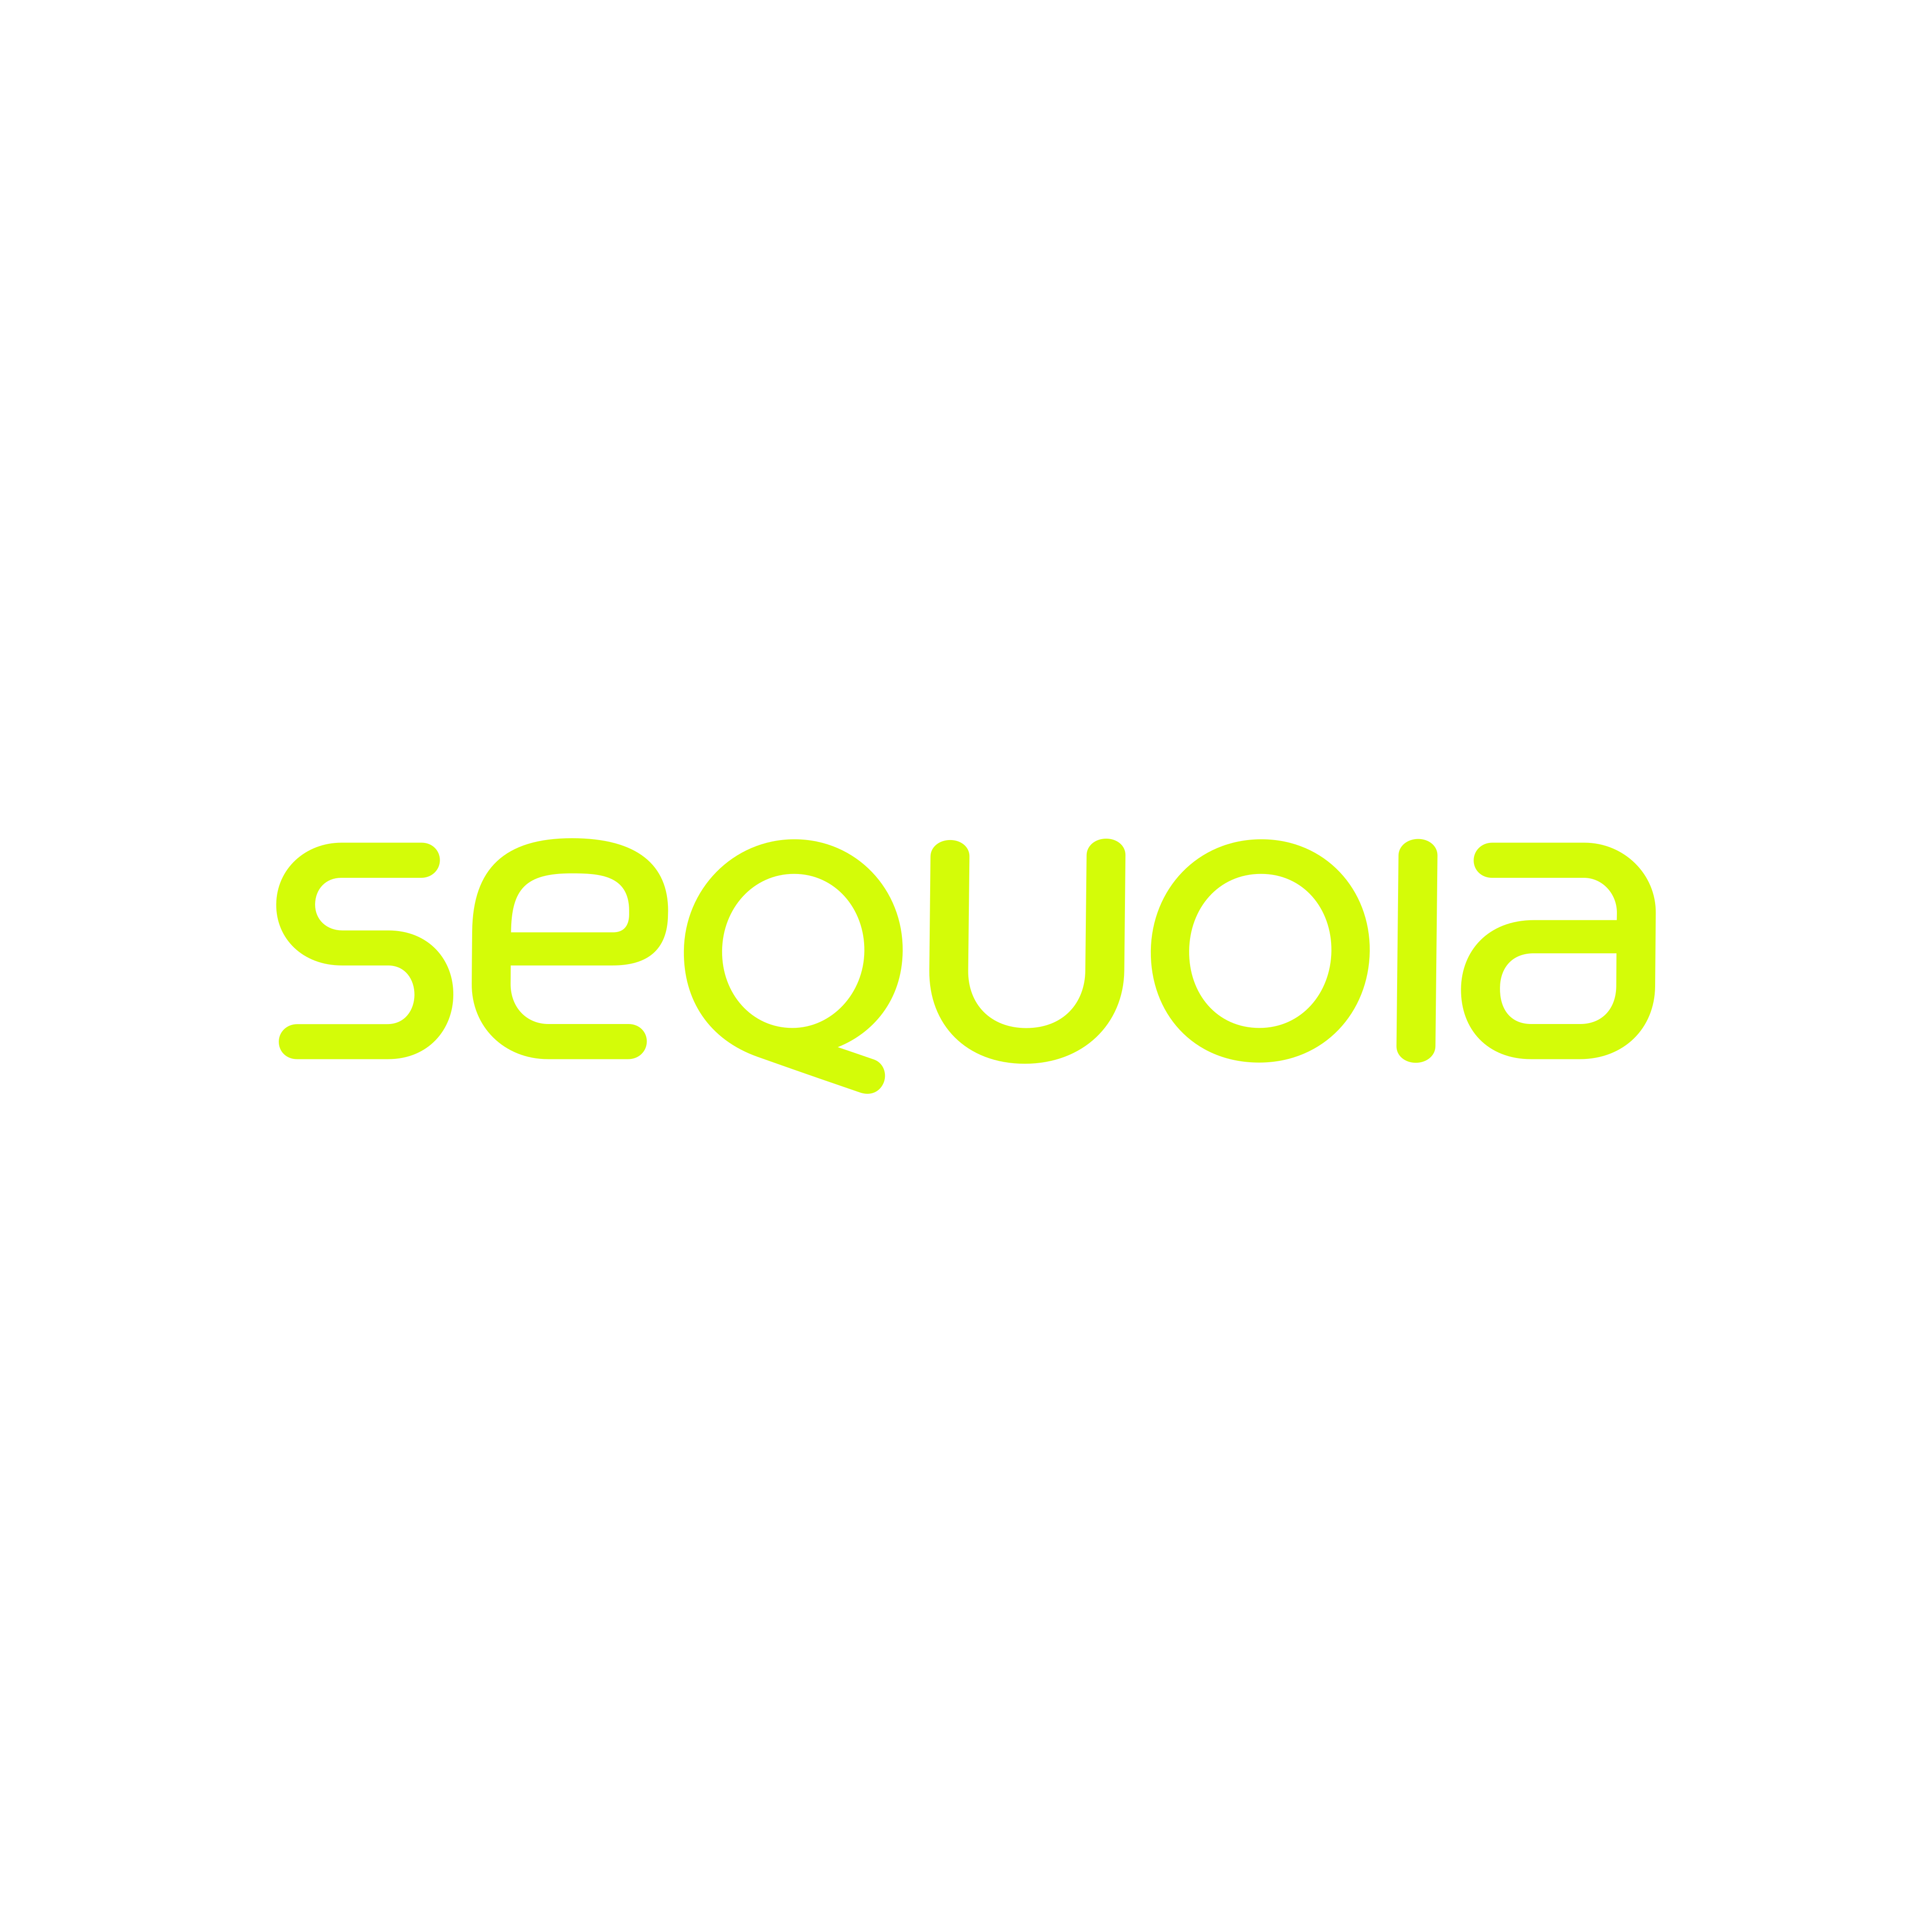 sequoia logo 0 - Sequoia Logo